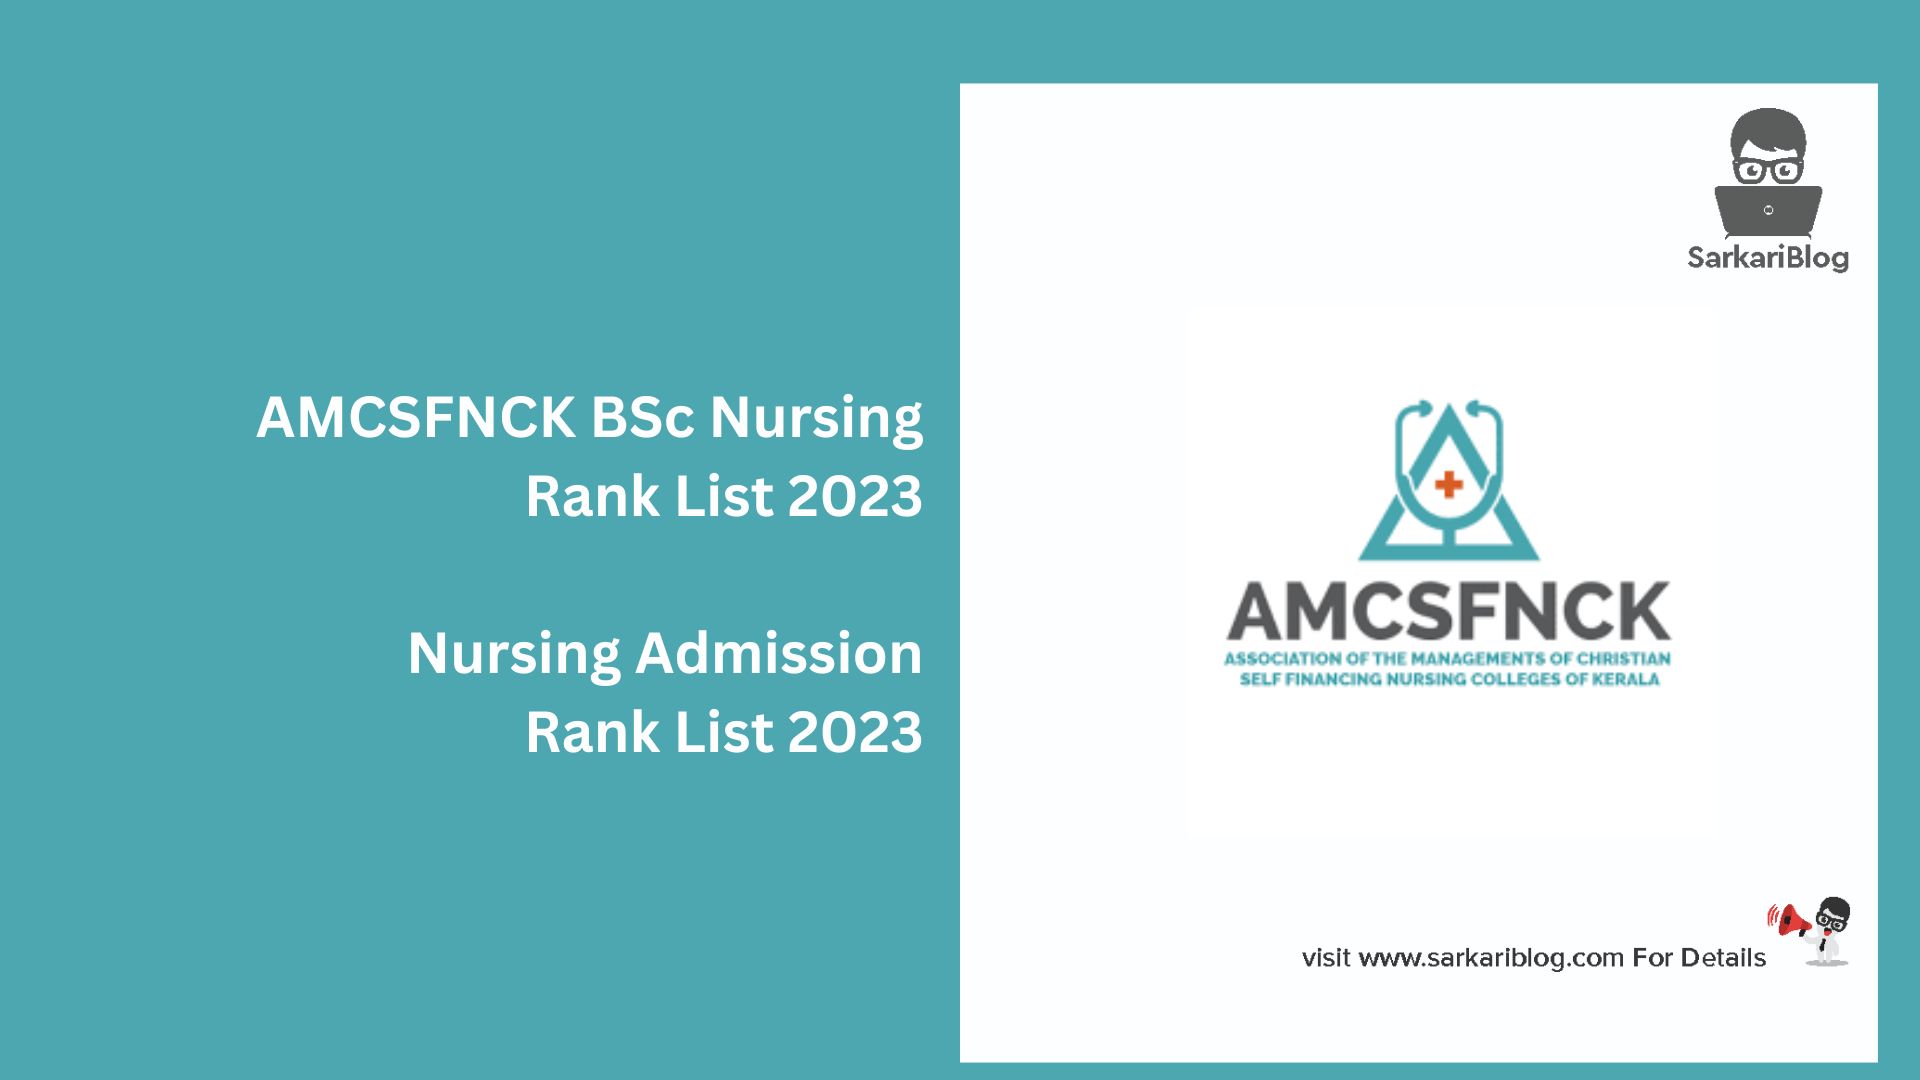 AMCSFNCK BSc Nursing Rank List 2023